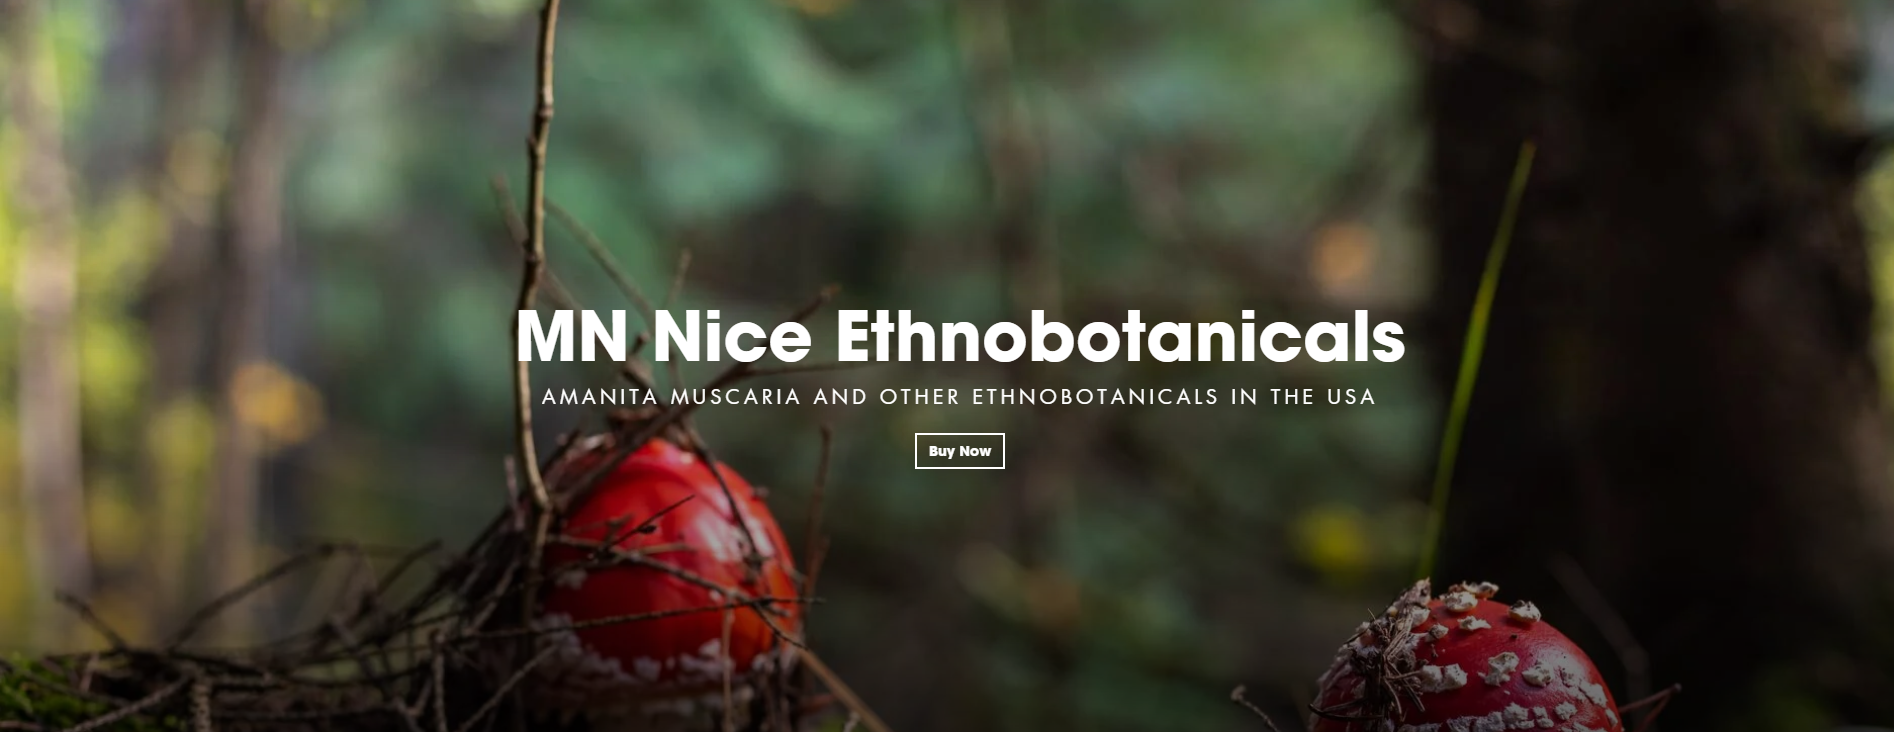 MN Nice Ethnobotanicals Affiliate Program Homepage Image